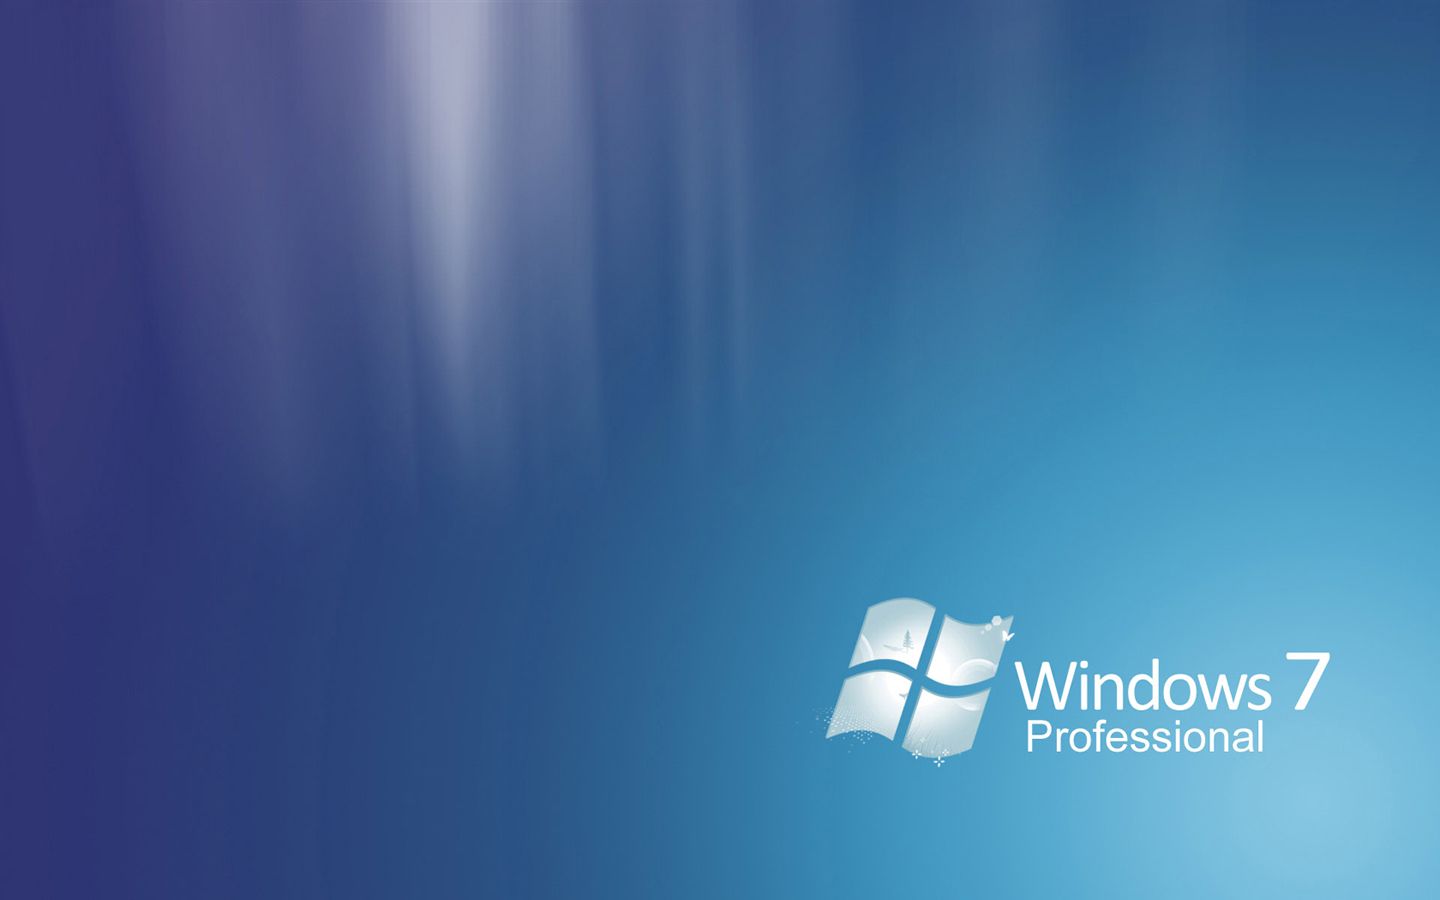 HD Windows Background Image For Your Desktop